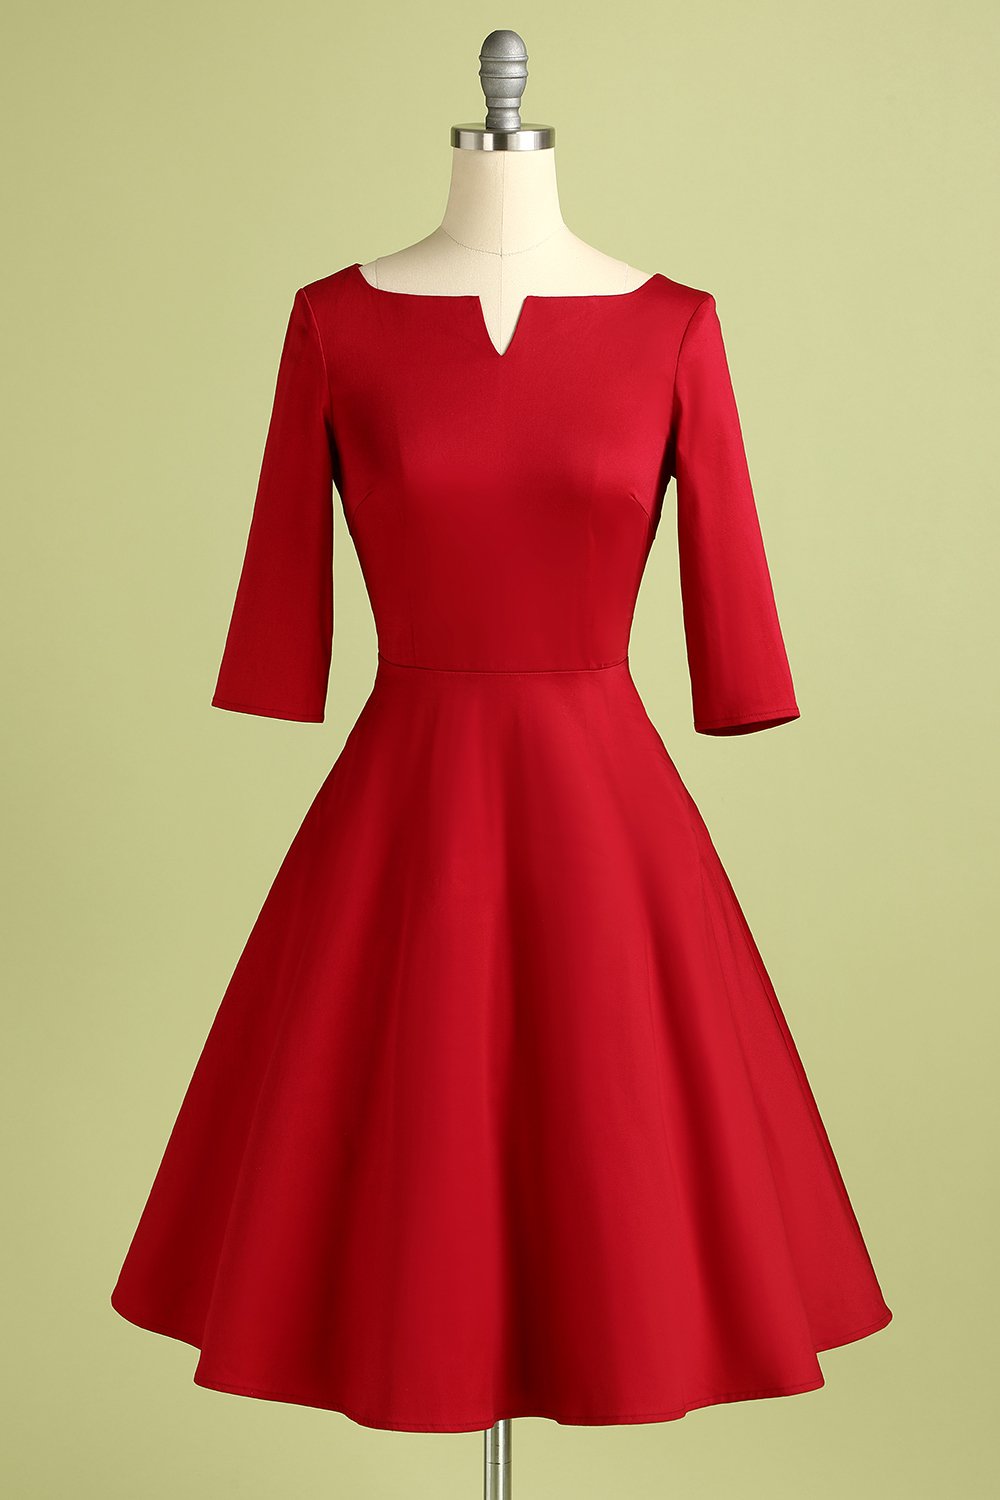 Plus Size Formal Vintage Dress